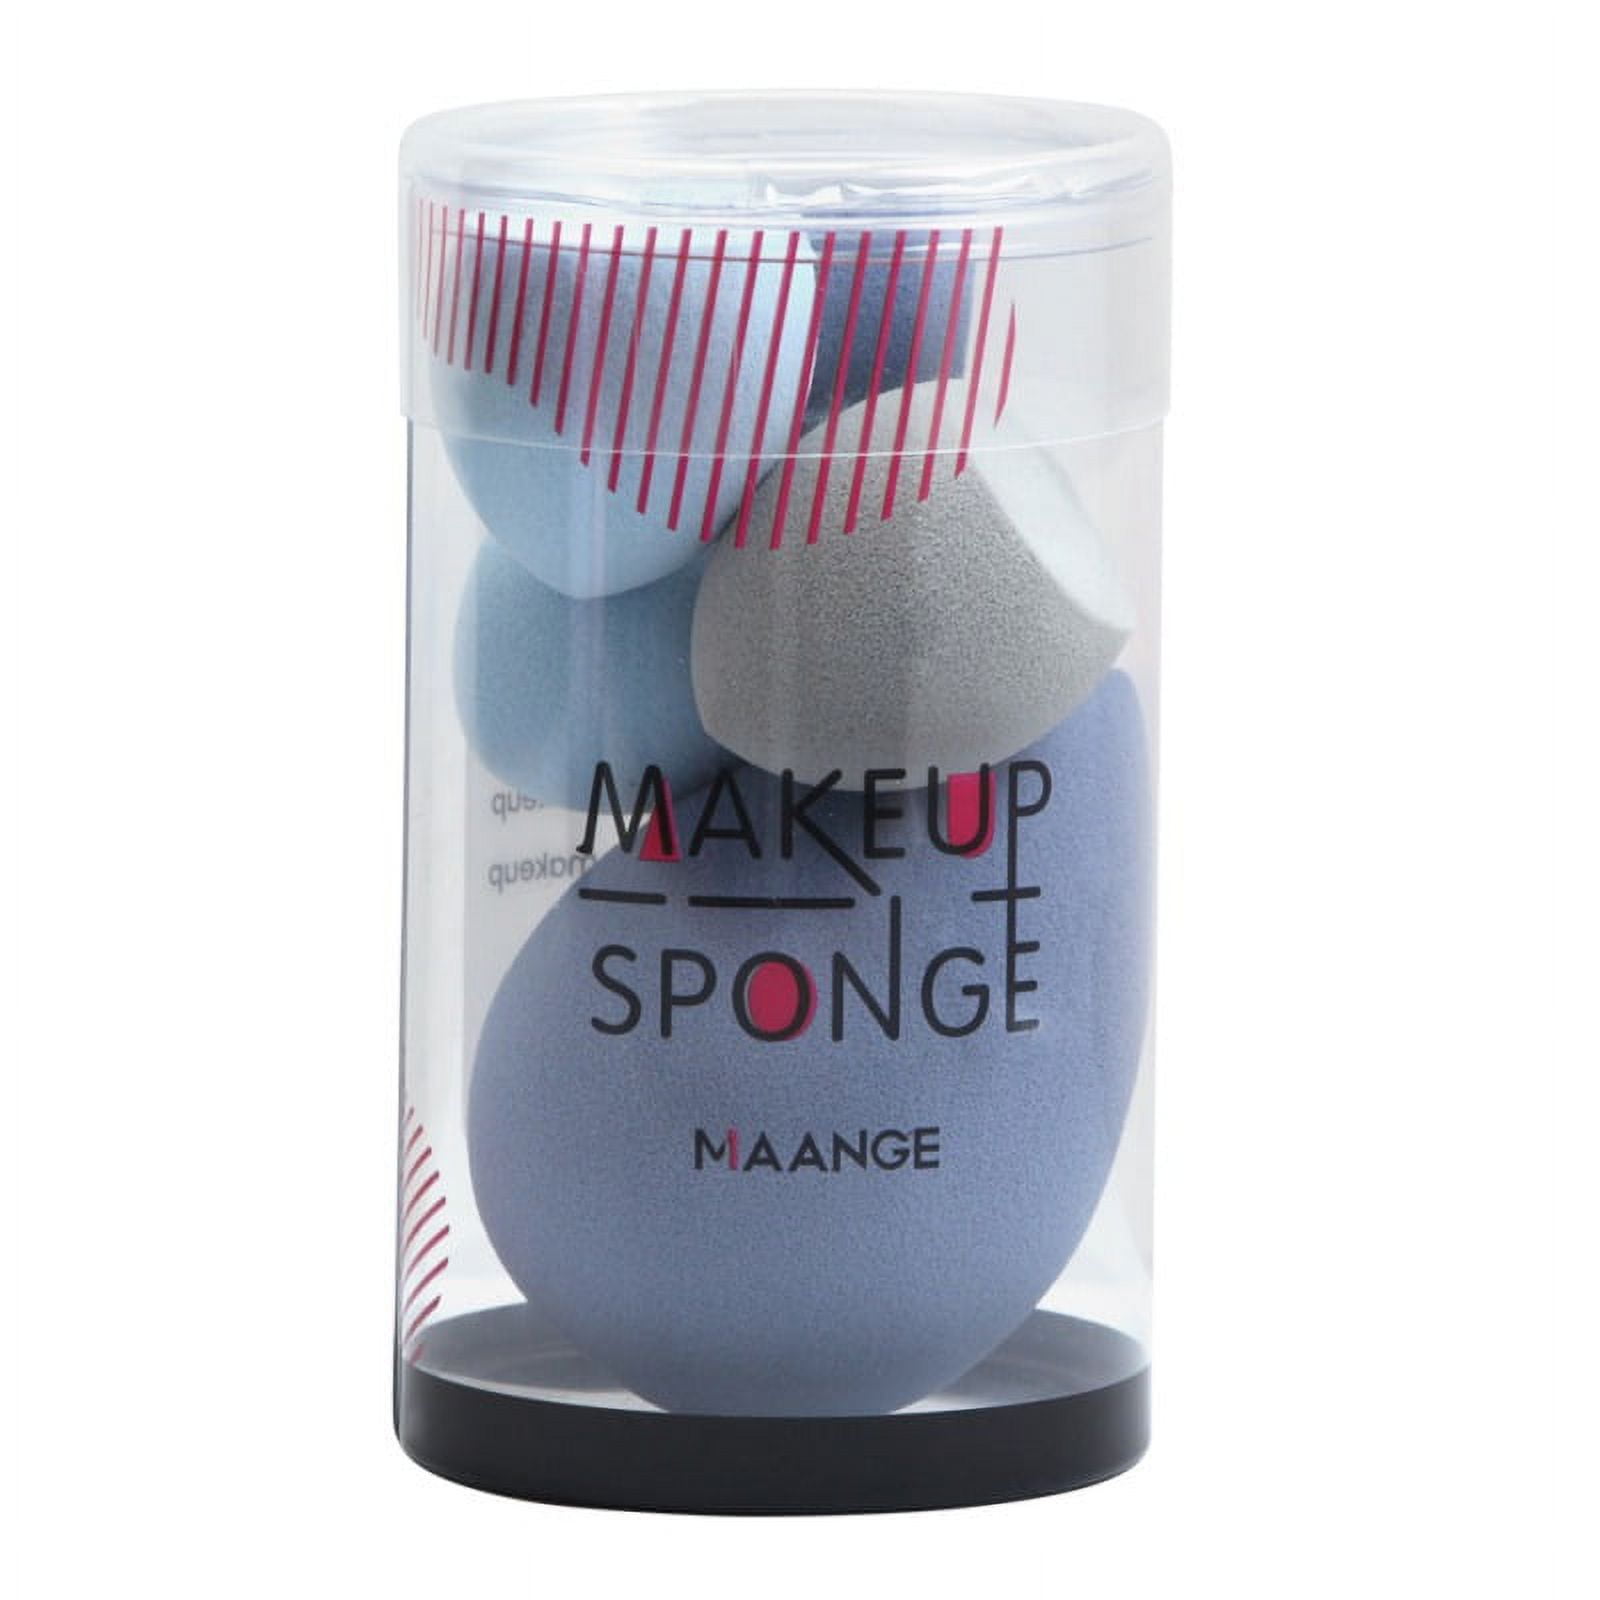 5 Pcs Makeup Sponge Set Blender Beauty Foundation Blending Sponge for  Liquid Cream and Powder Multi-colored Makeup Sponges